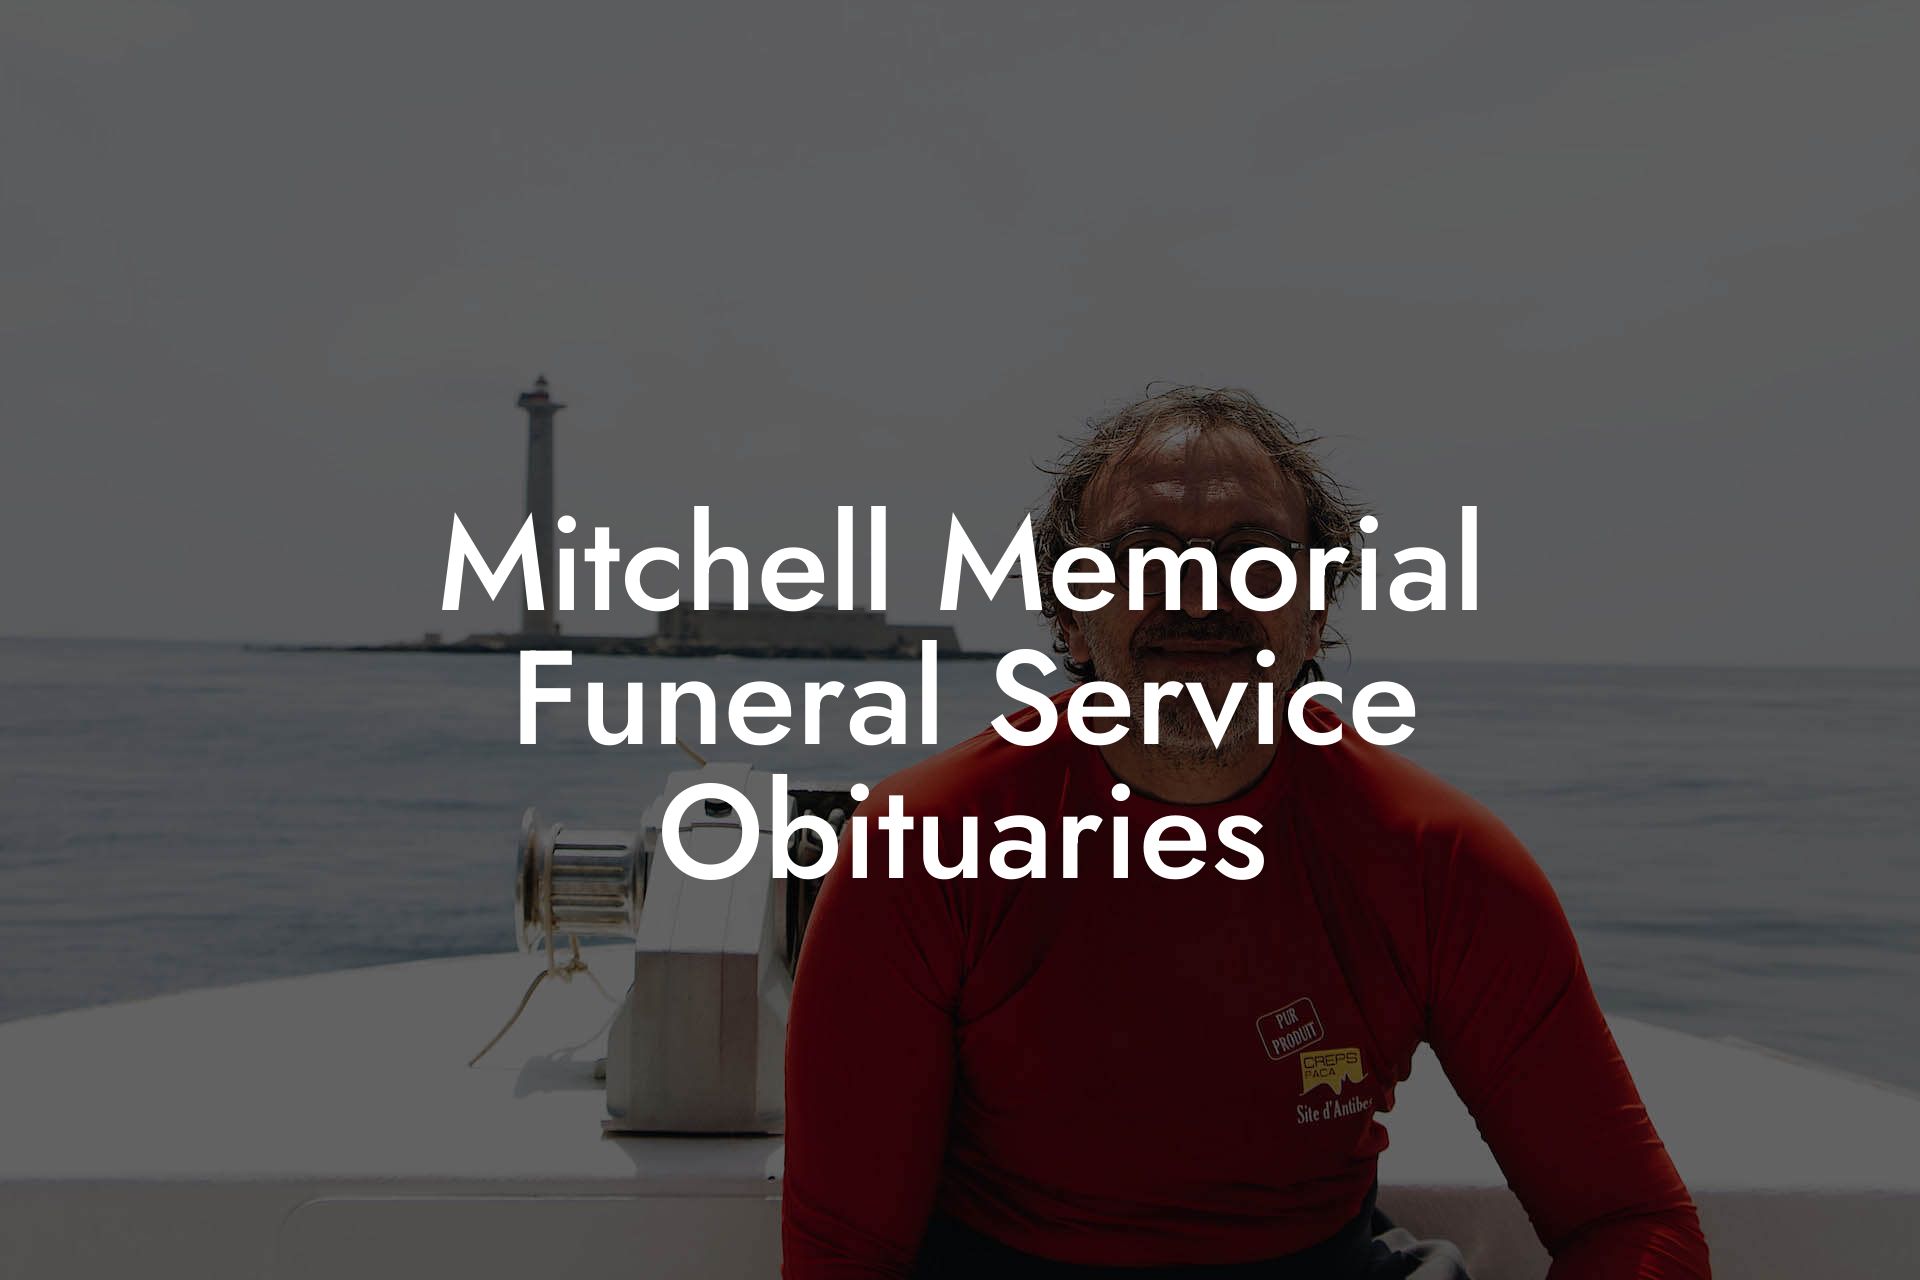 Mitchell Memorial Funeral Service Obituaries